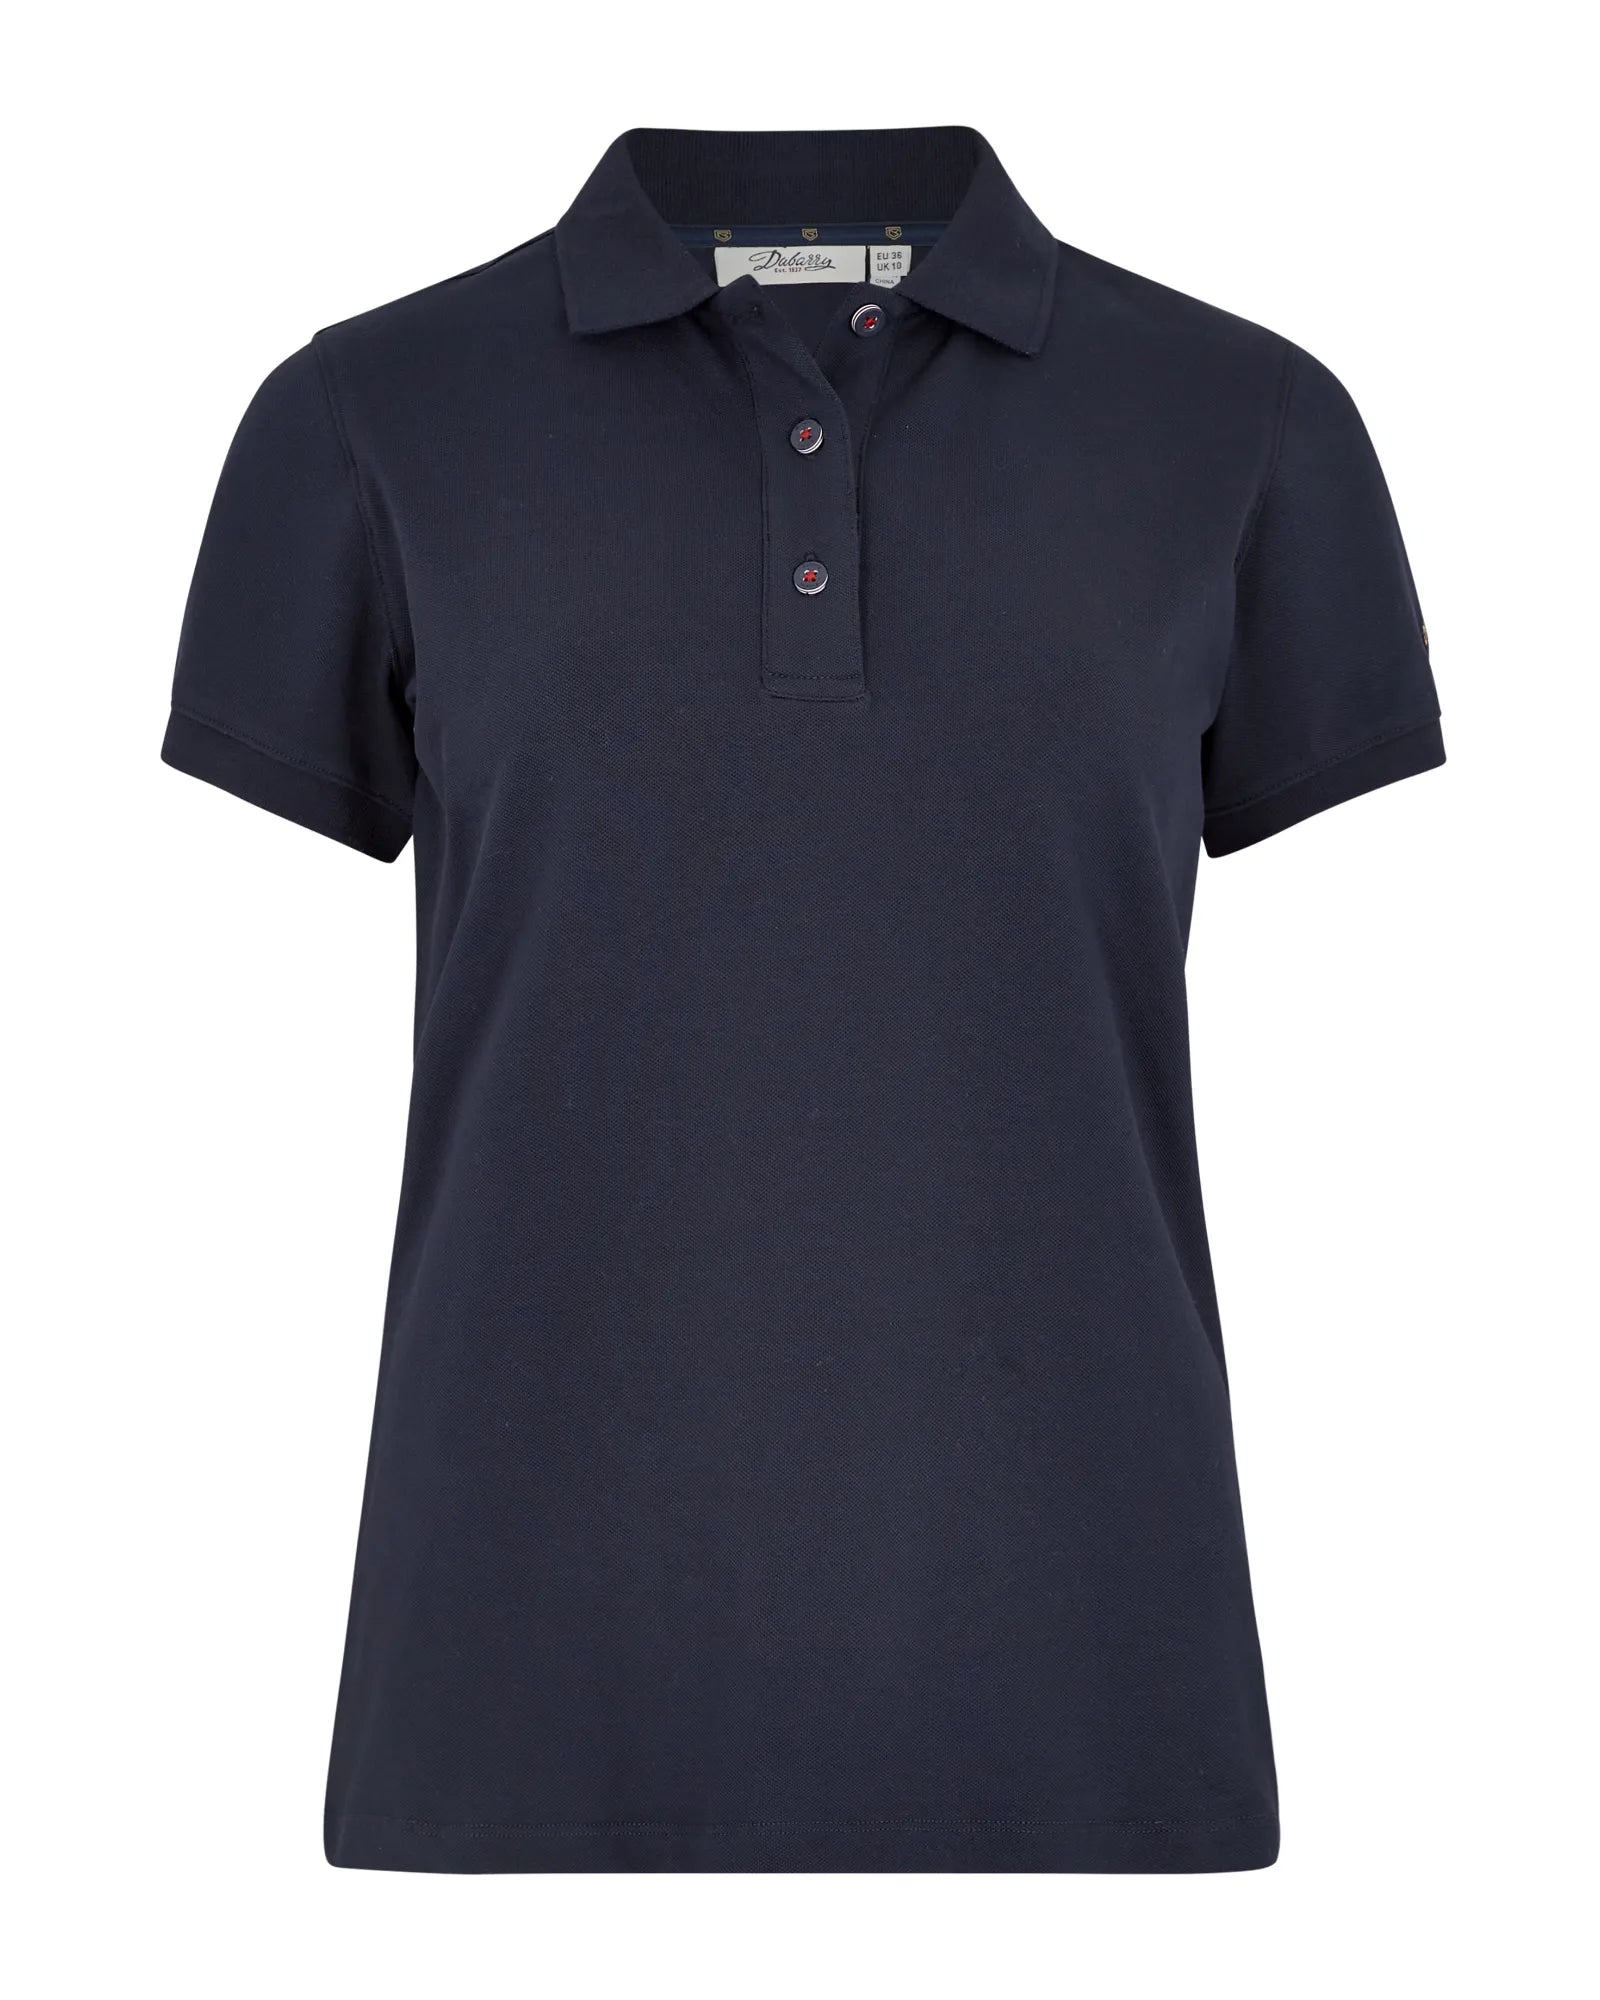 Drury Polo Shirt - Navy